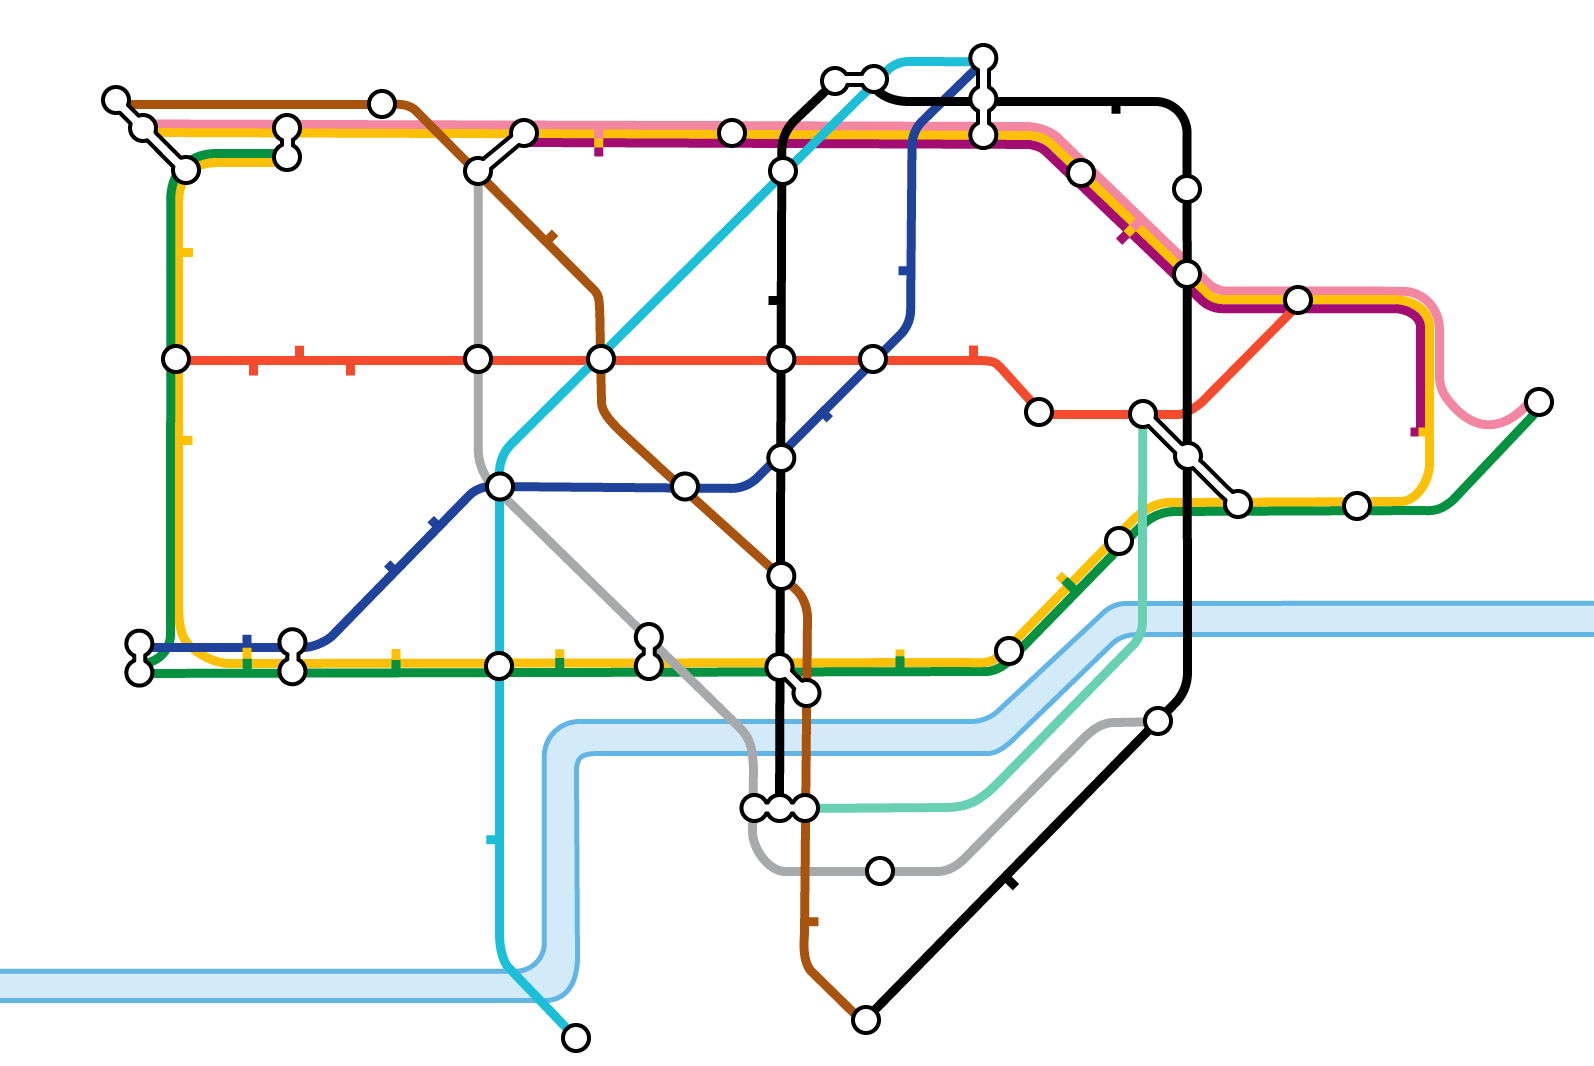 Tube map